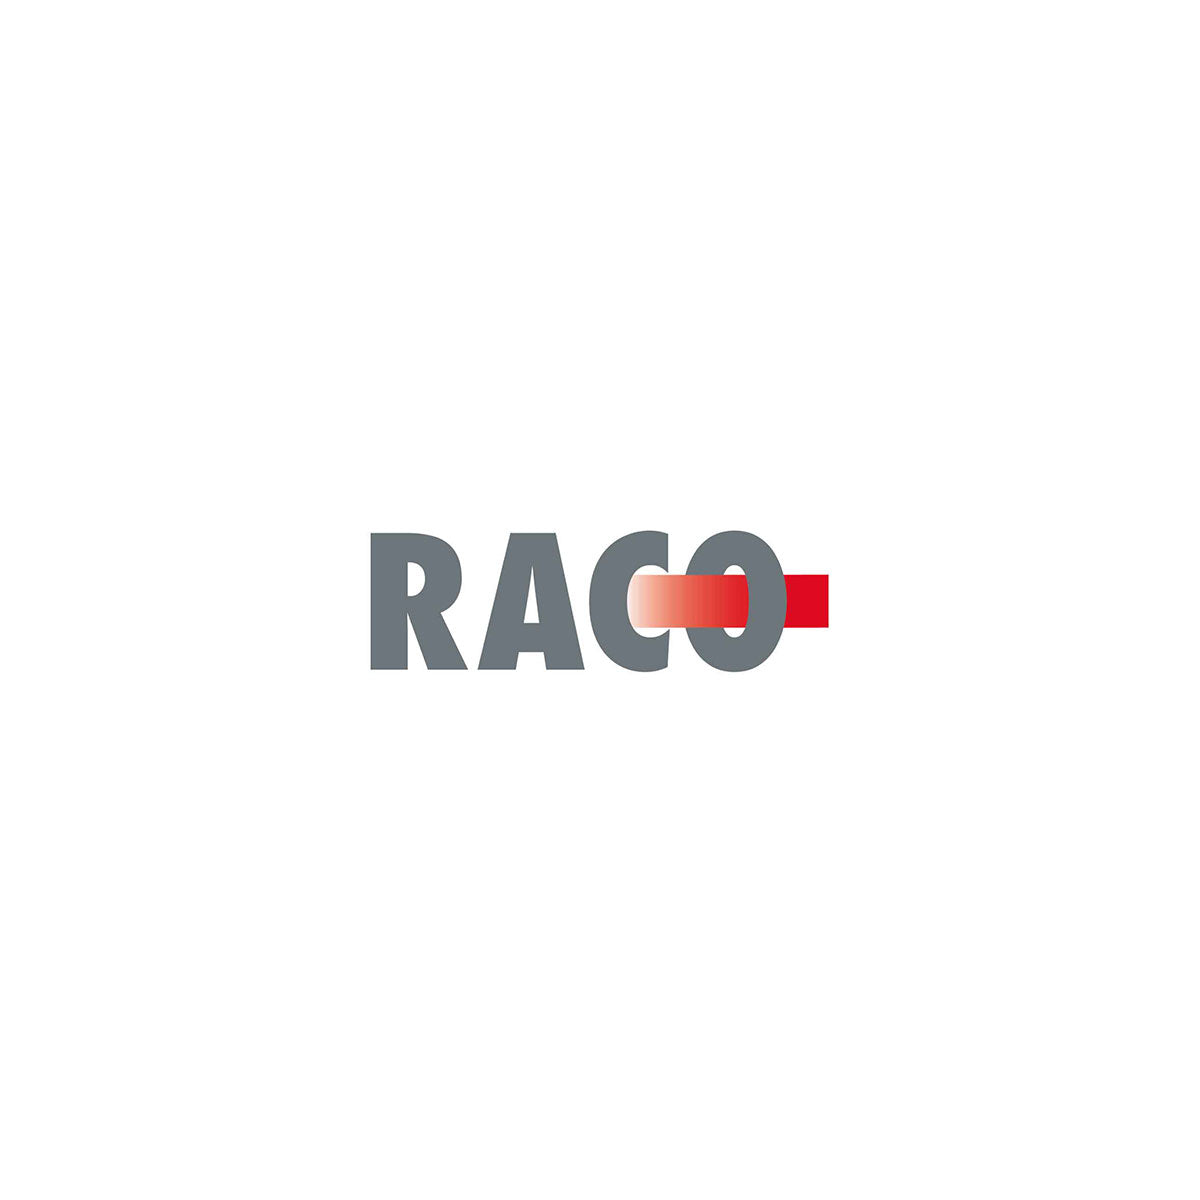 Article de Raco